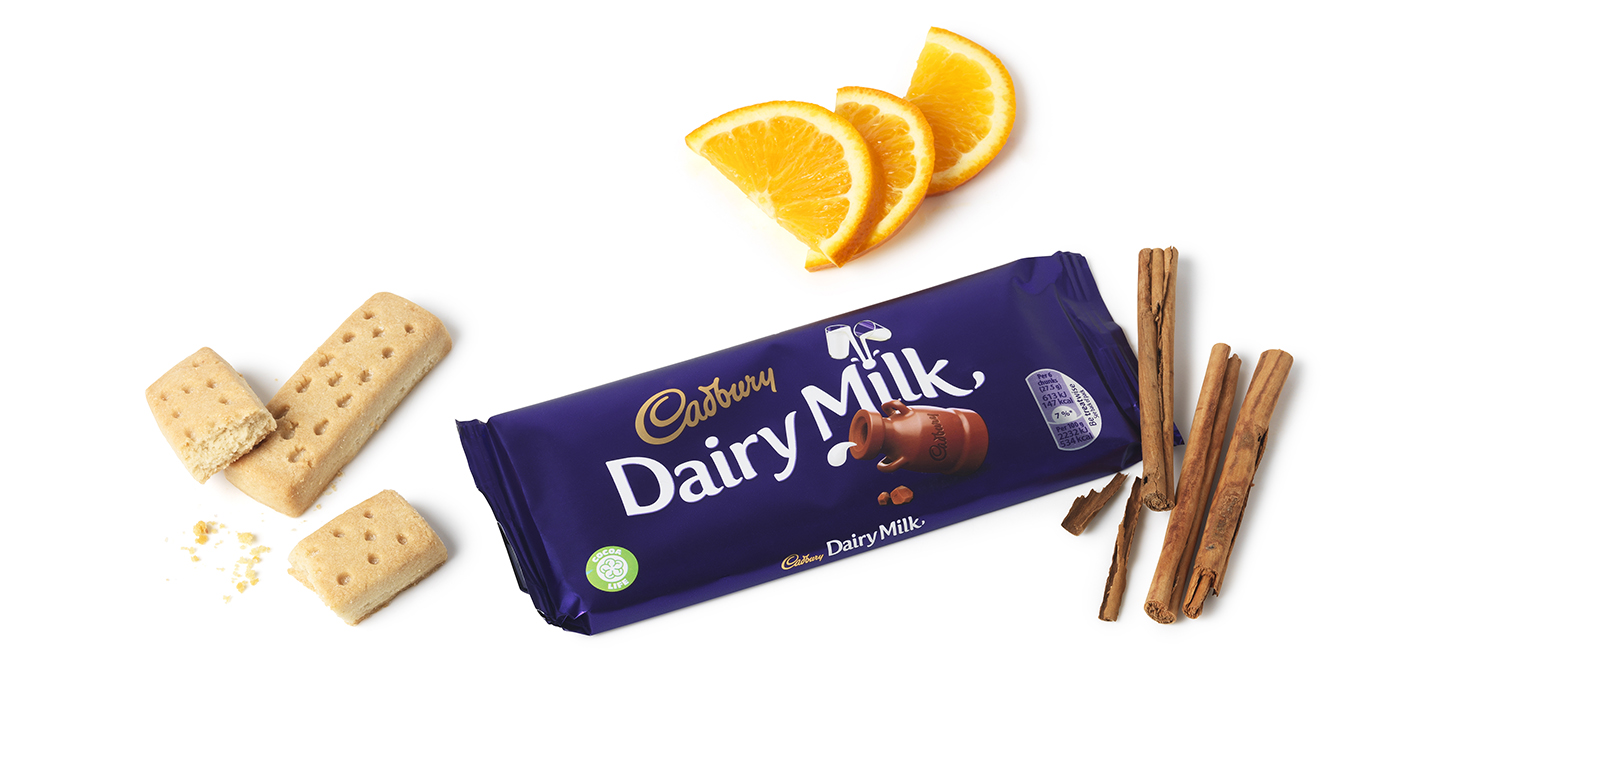 cadbury dairy milk promotion